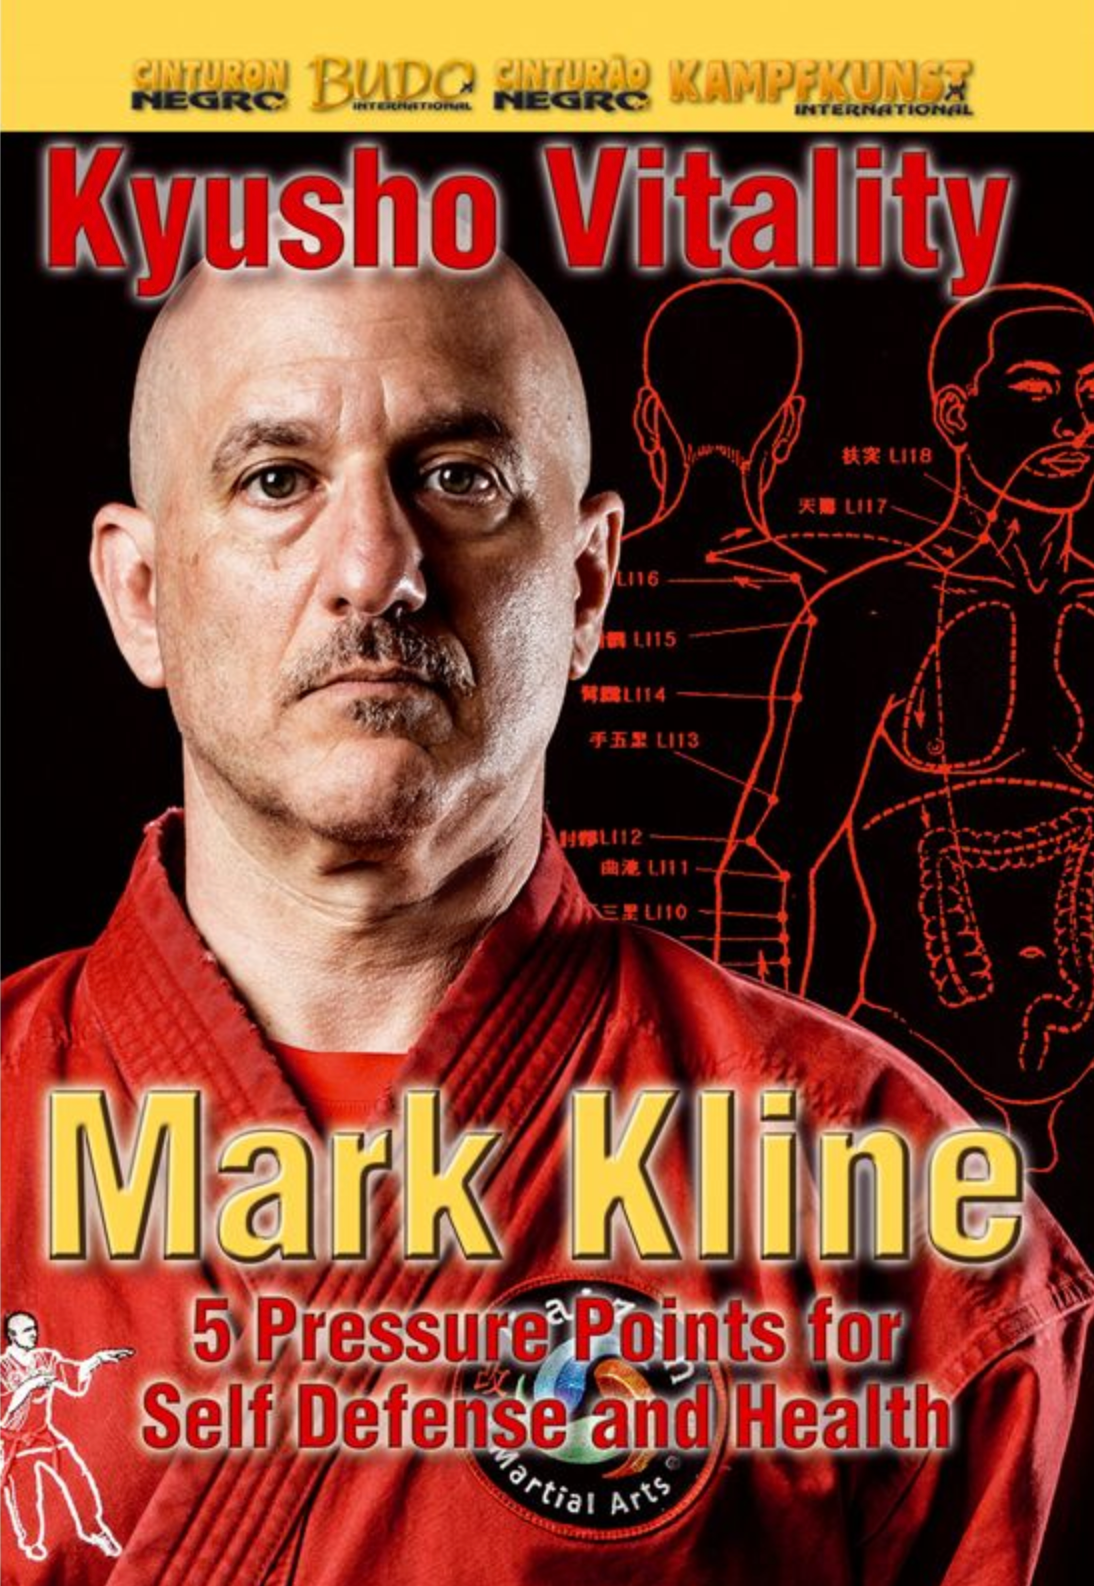 Kyusho Vitality: 5 Pressure Points for Self Defense & Health DVD with Mark Kline - Budovideos Inc